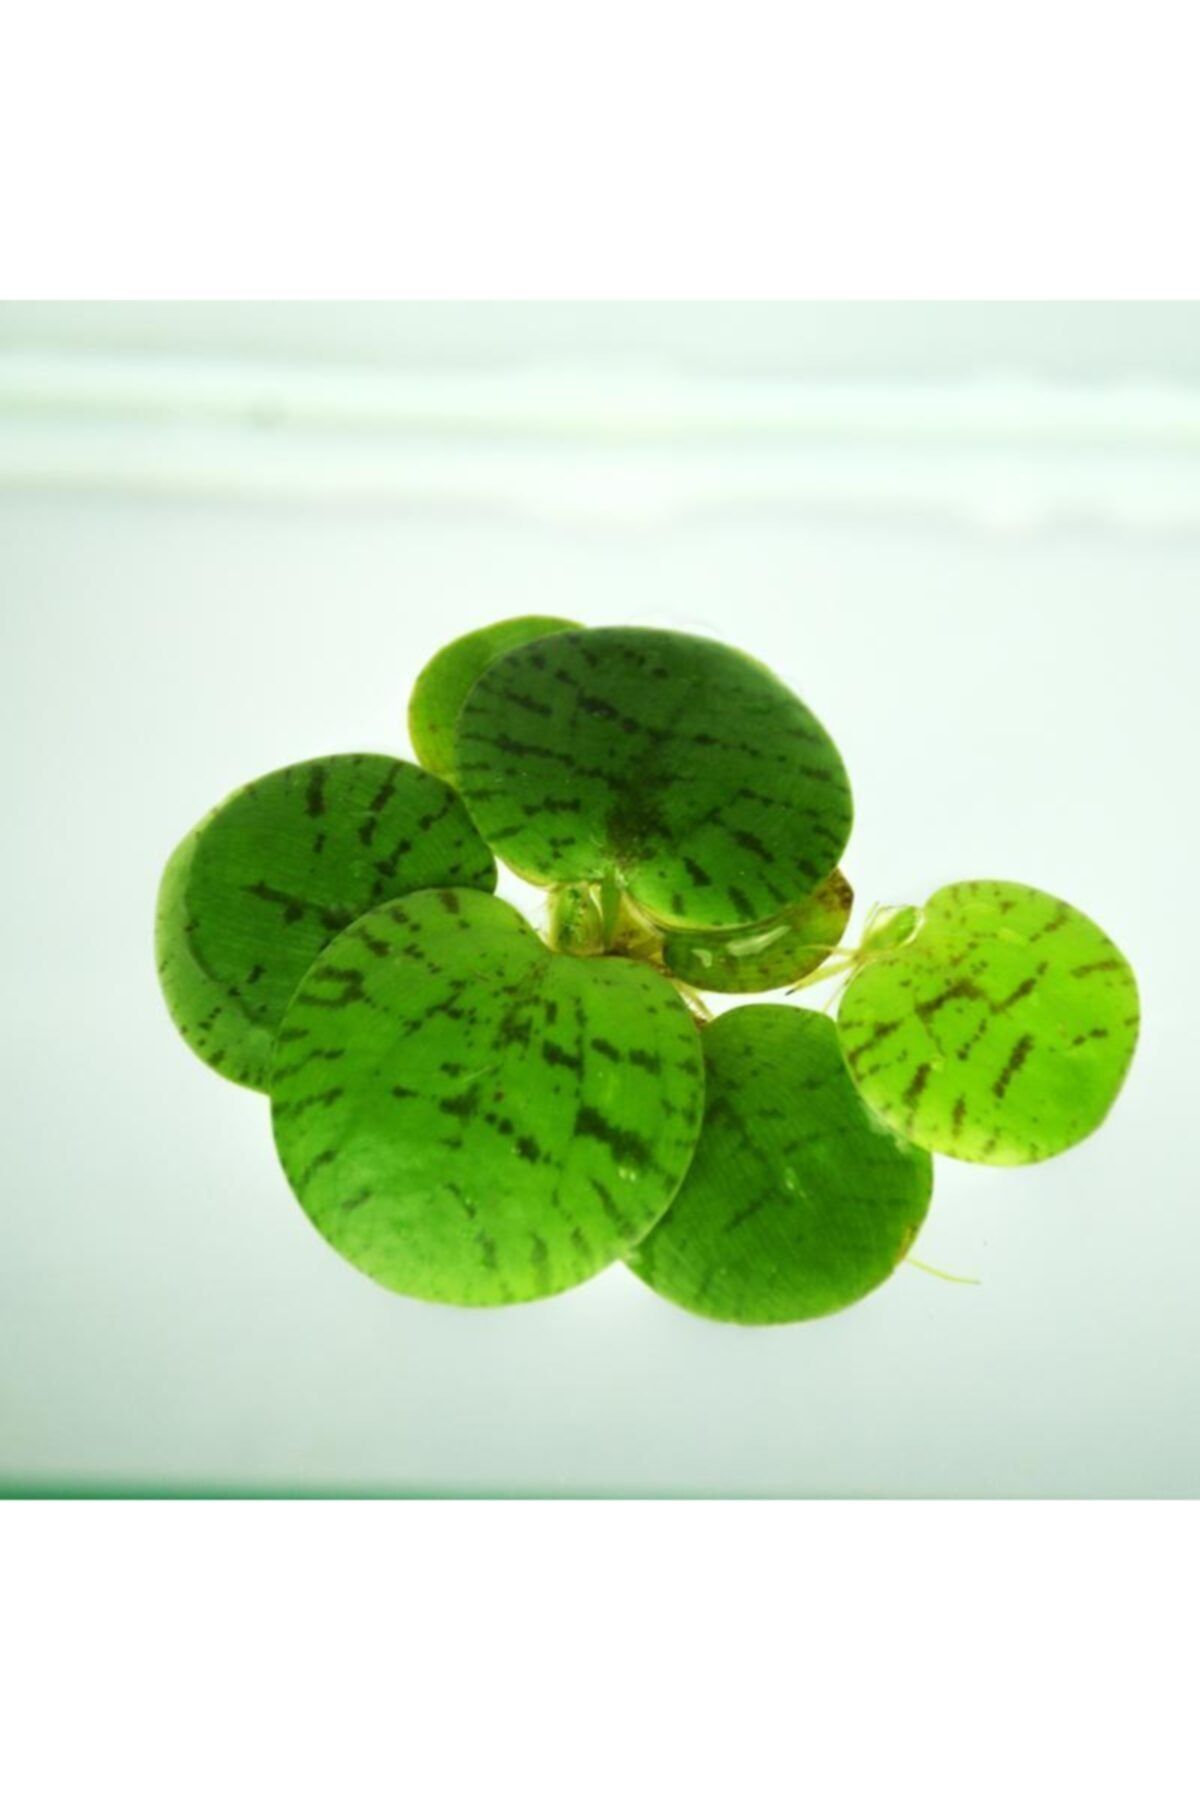 BIO AQUATIC Amazon Frogbit Akvaryum Üstü Bitkisi 4 Adet Canlı Bitki